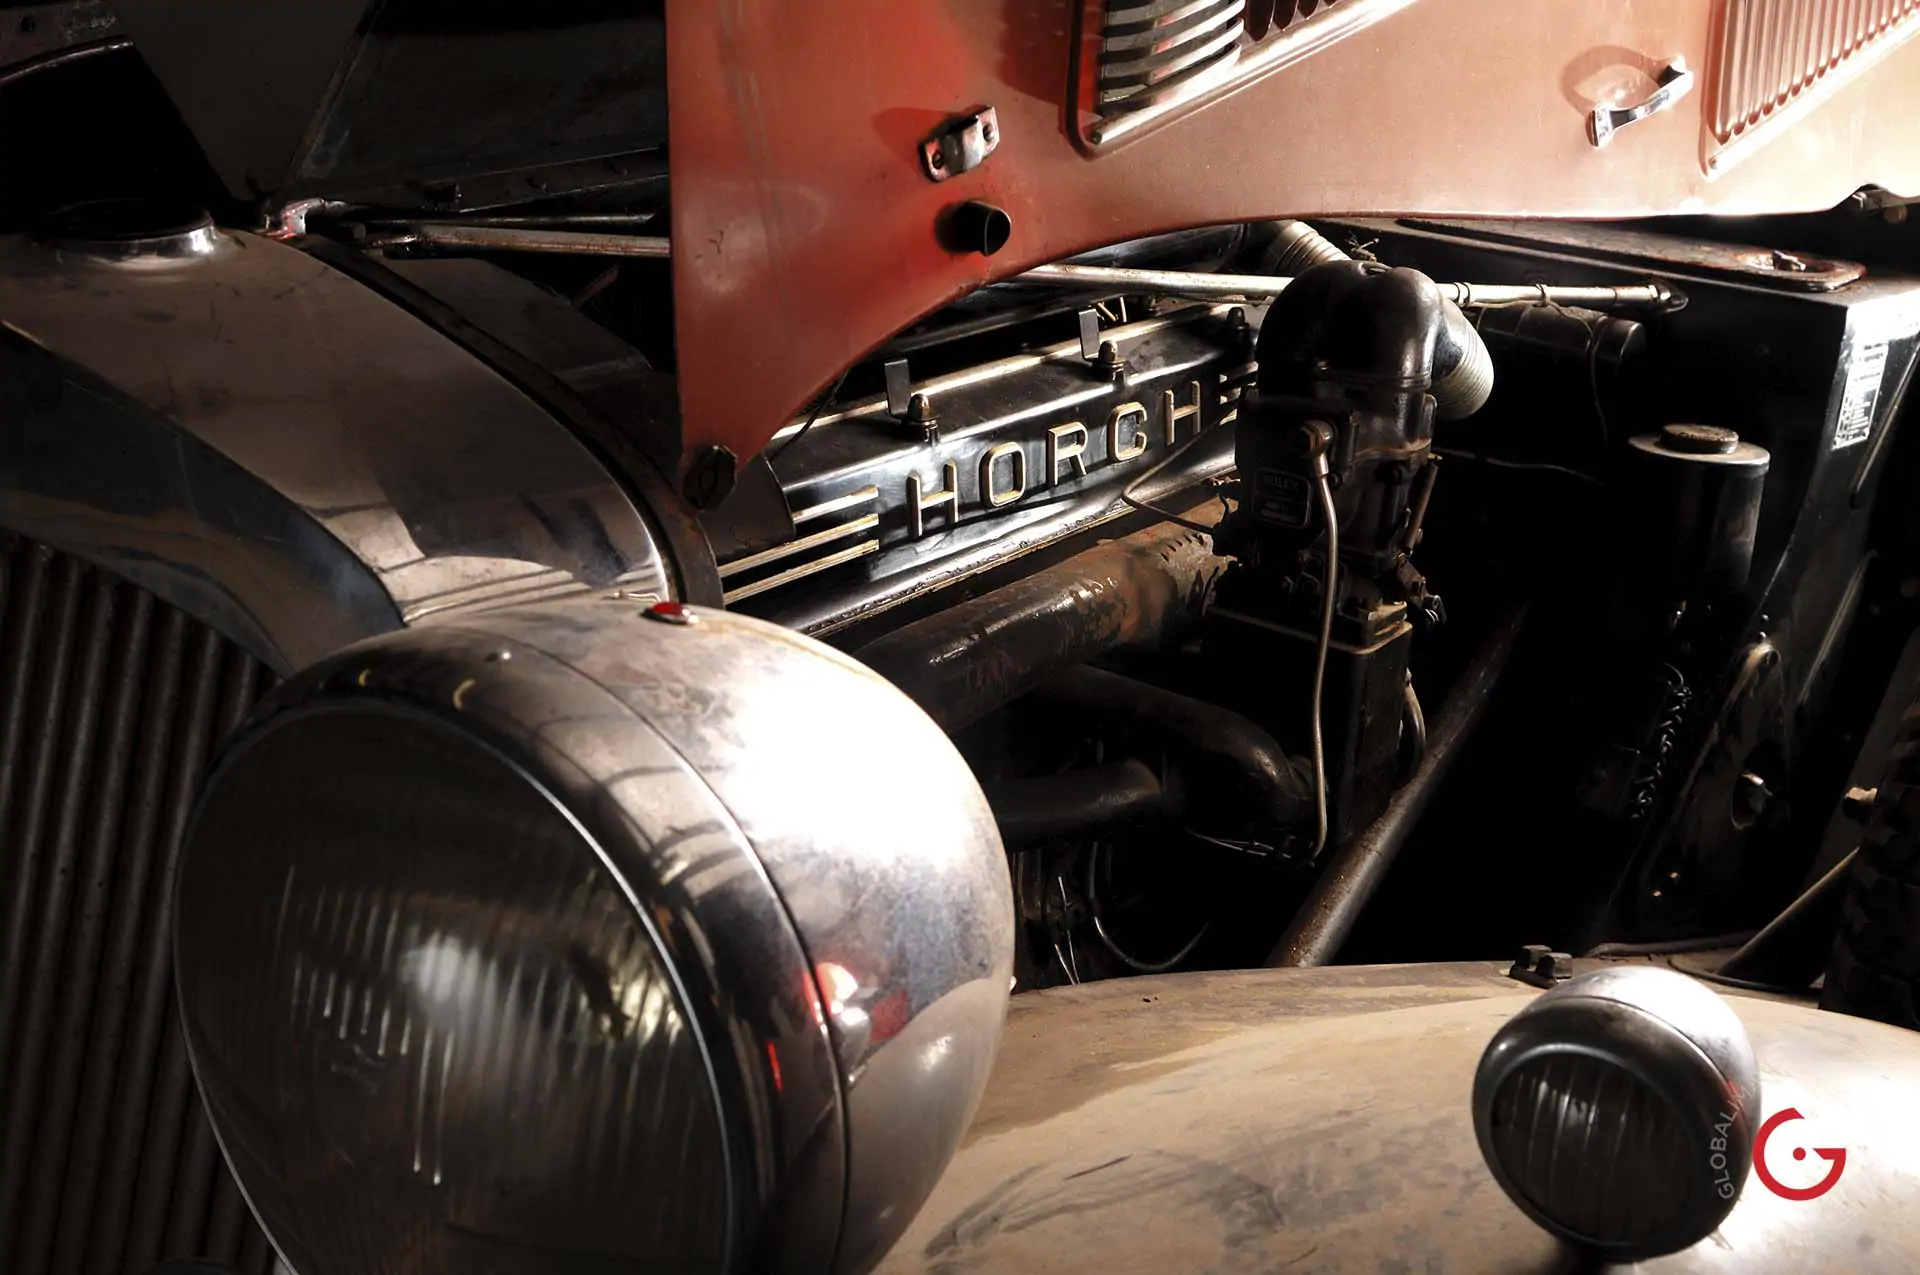 Engine Detail - Horch Barn Find, Branson Classic Car Auction - Professional Car Photographer, Automotive Photography